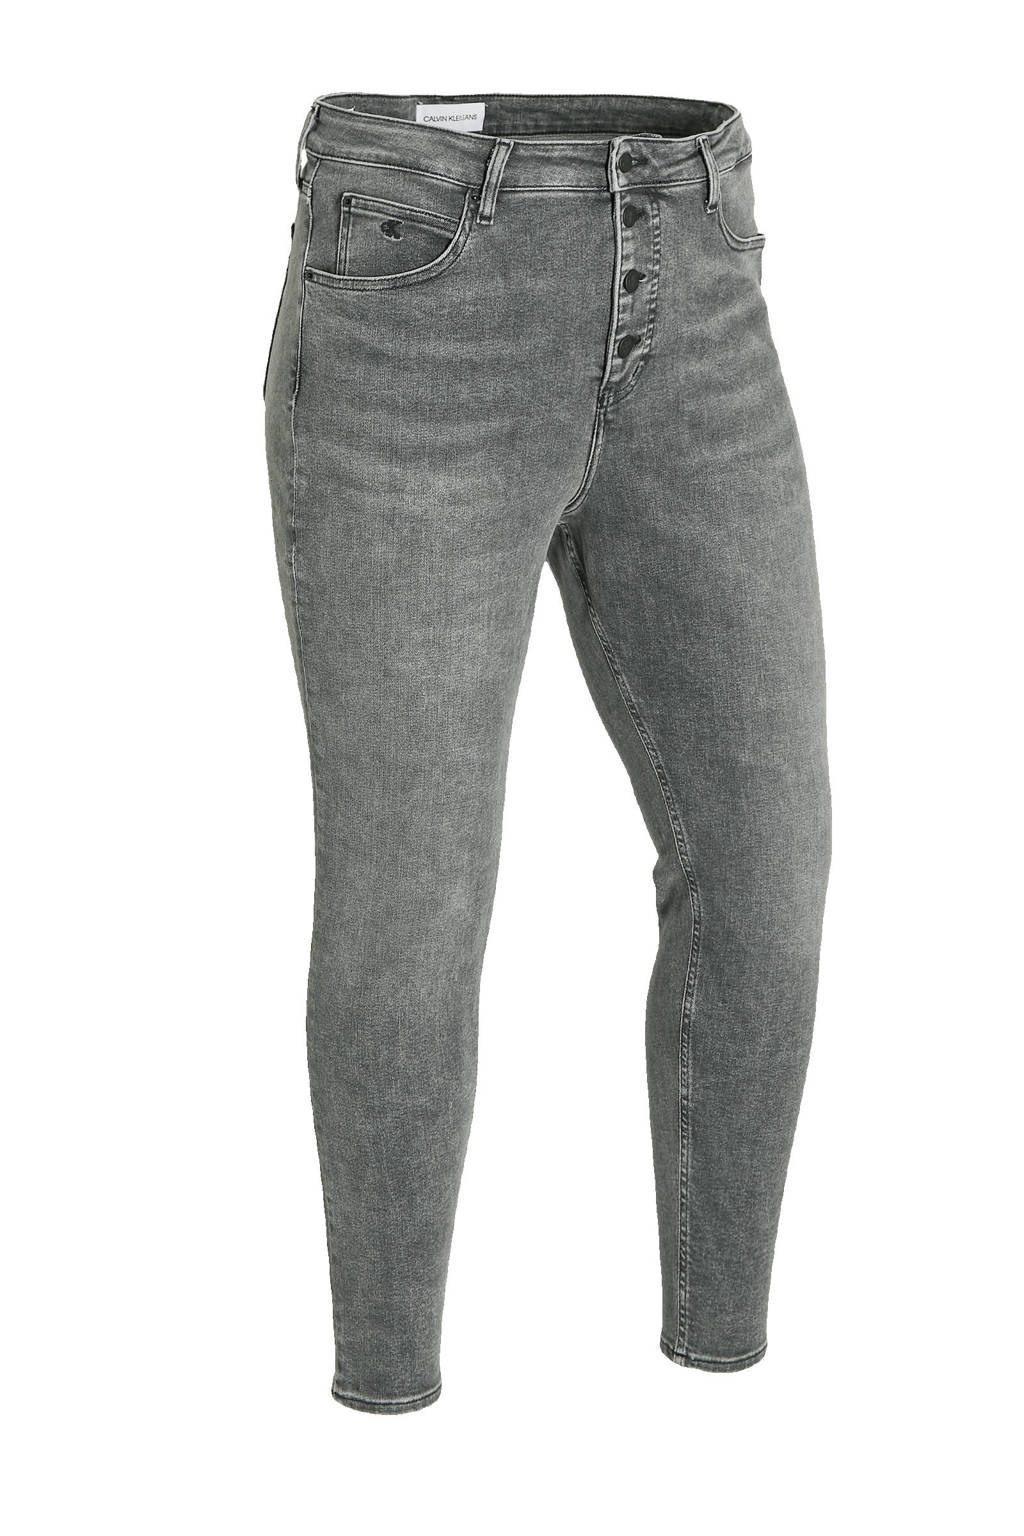 CALVIN KLEIN Plus high waist skinny jeans 1bz denim grey, 1BZ Denim Grey